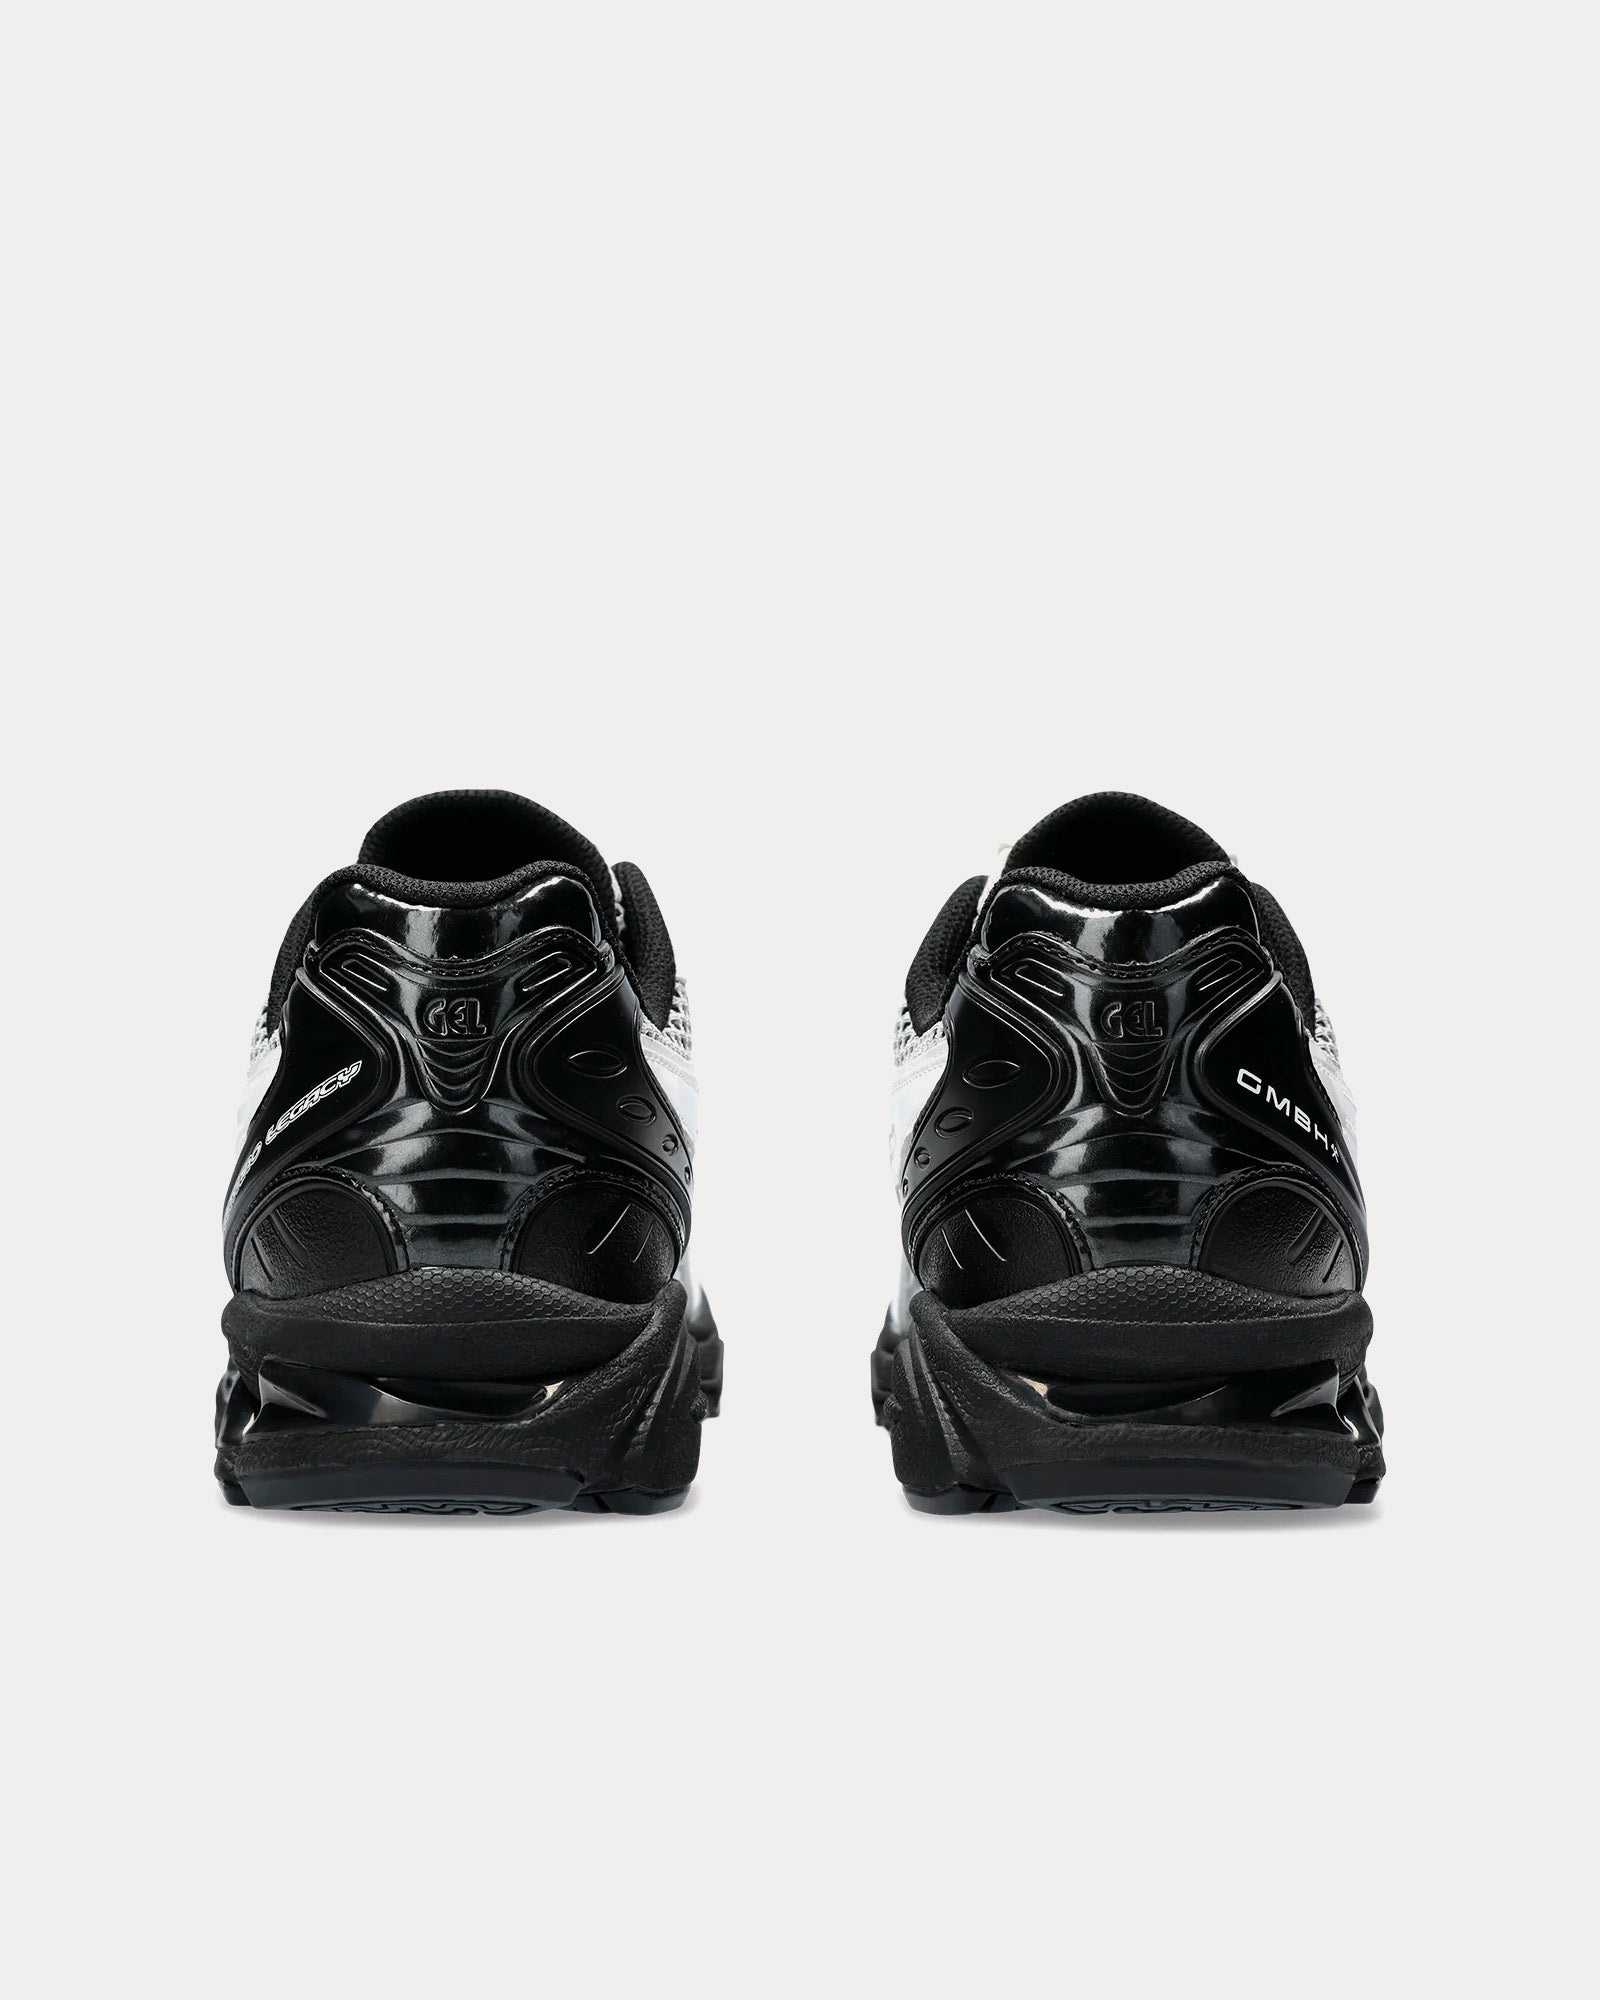 Asics x GmbH - Gel-Kayano Legacy White / Black Low Top Sneakers